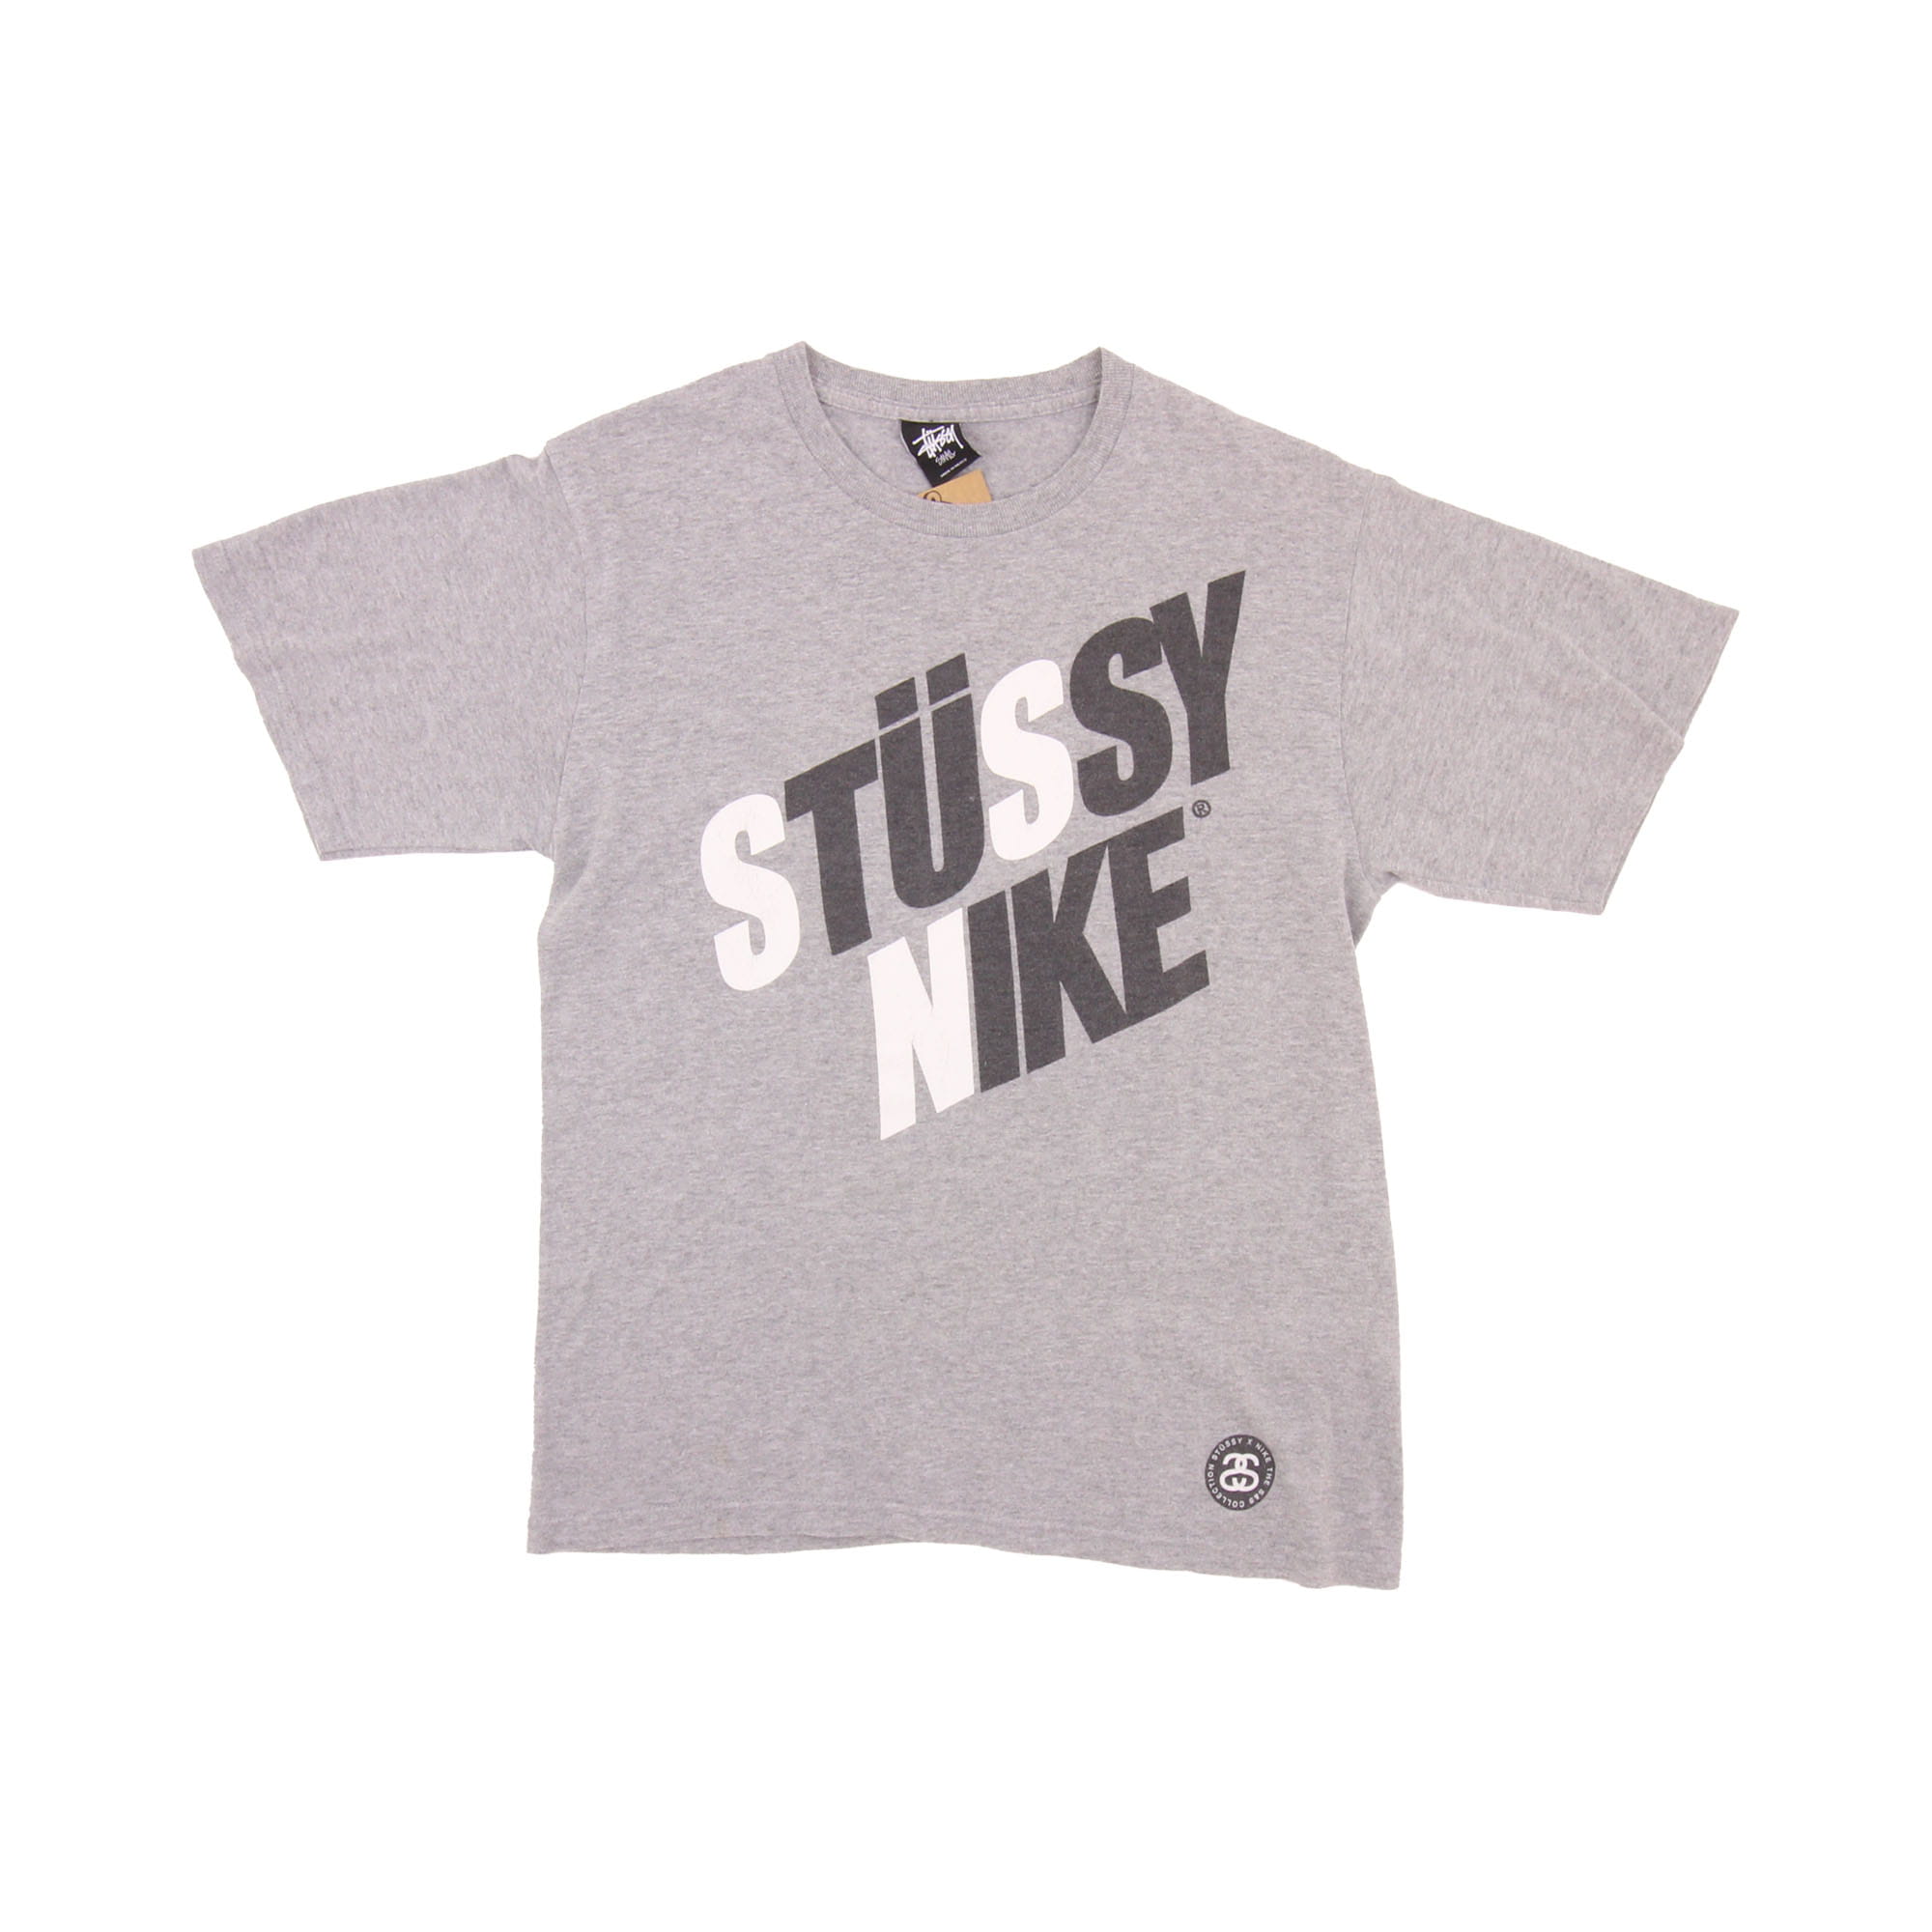 Rare Stussy x Nike Collab, Mid 2000's Edition T-Shirt - M